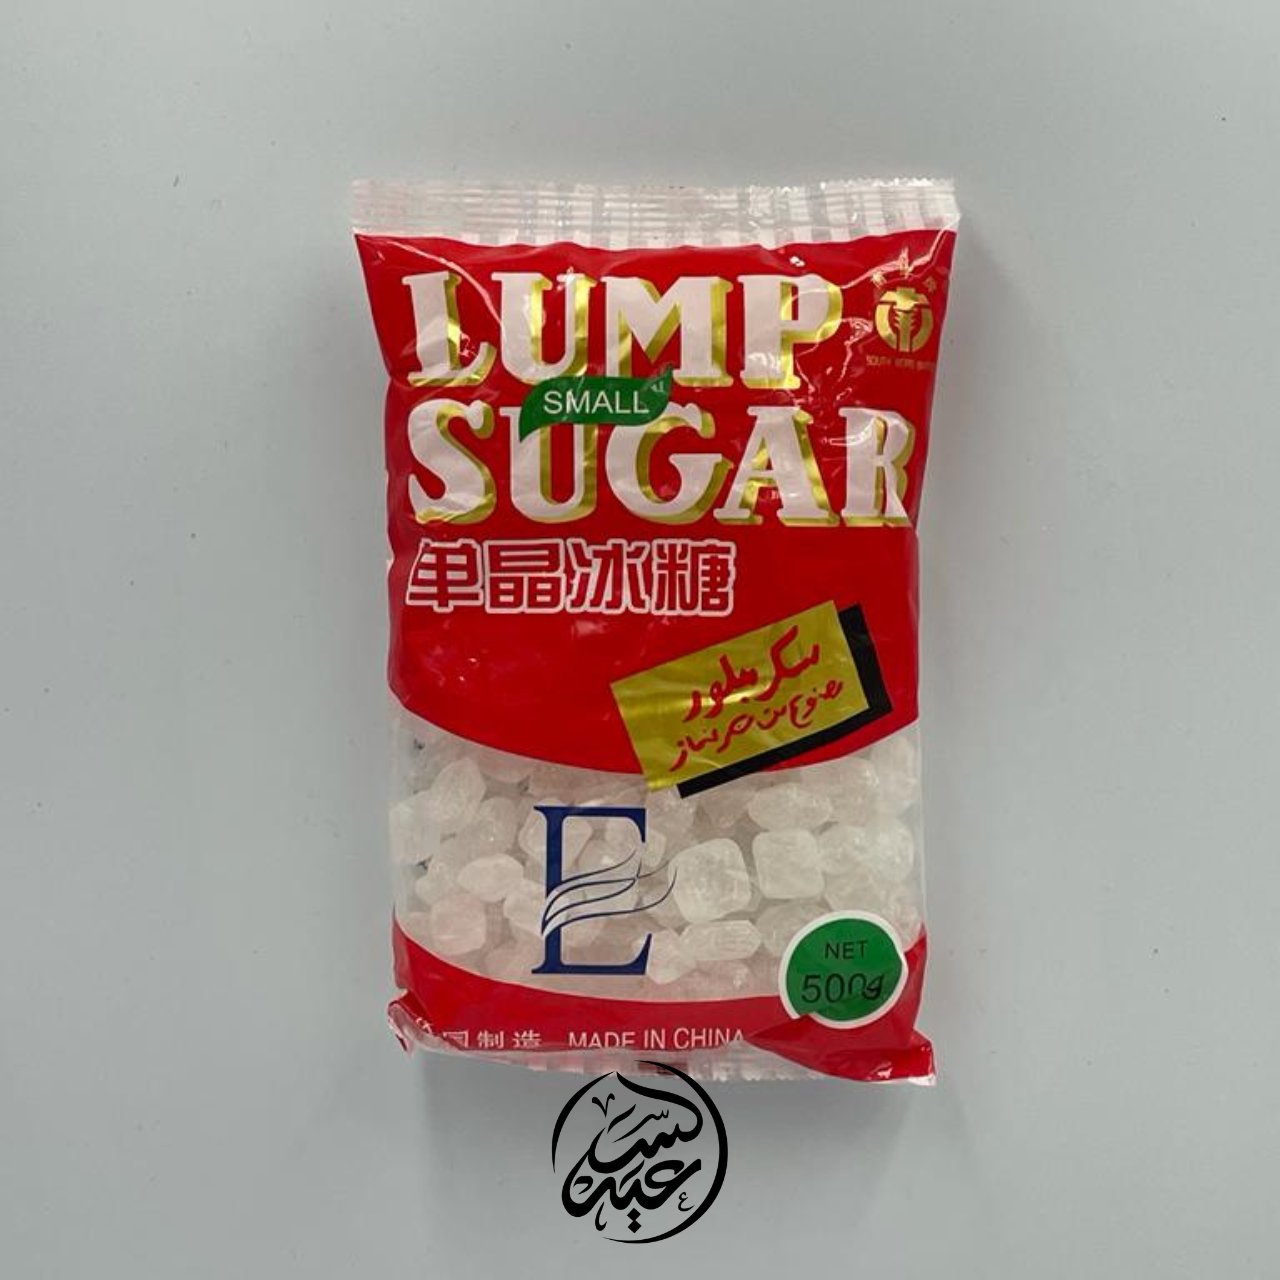 Lump sugar سكر فضي - بهارات و عطارة السعيد